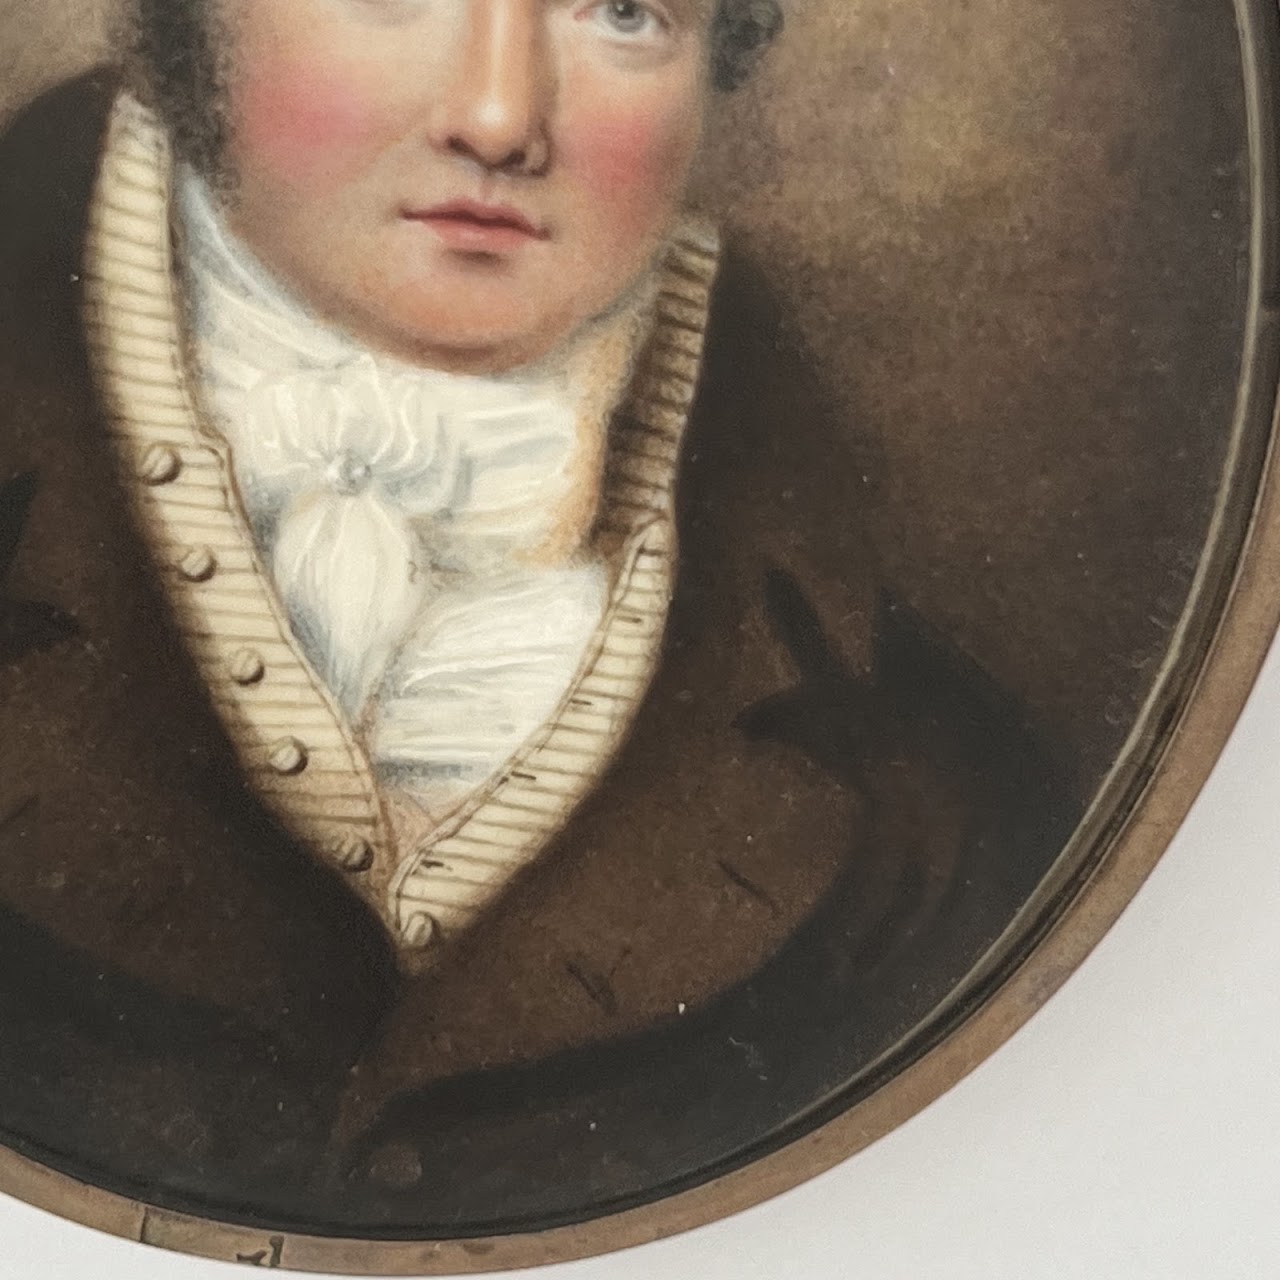 Portrait of a Gentleman Miniature Portrait Painting in Copper Frame